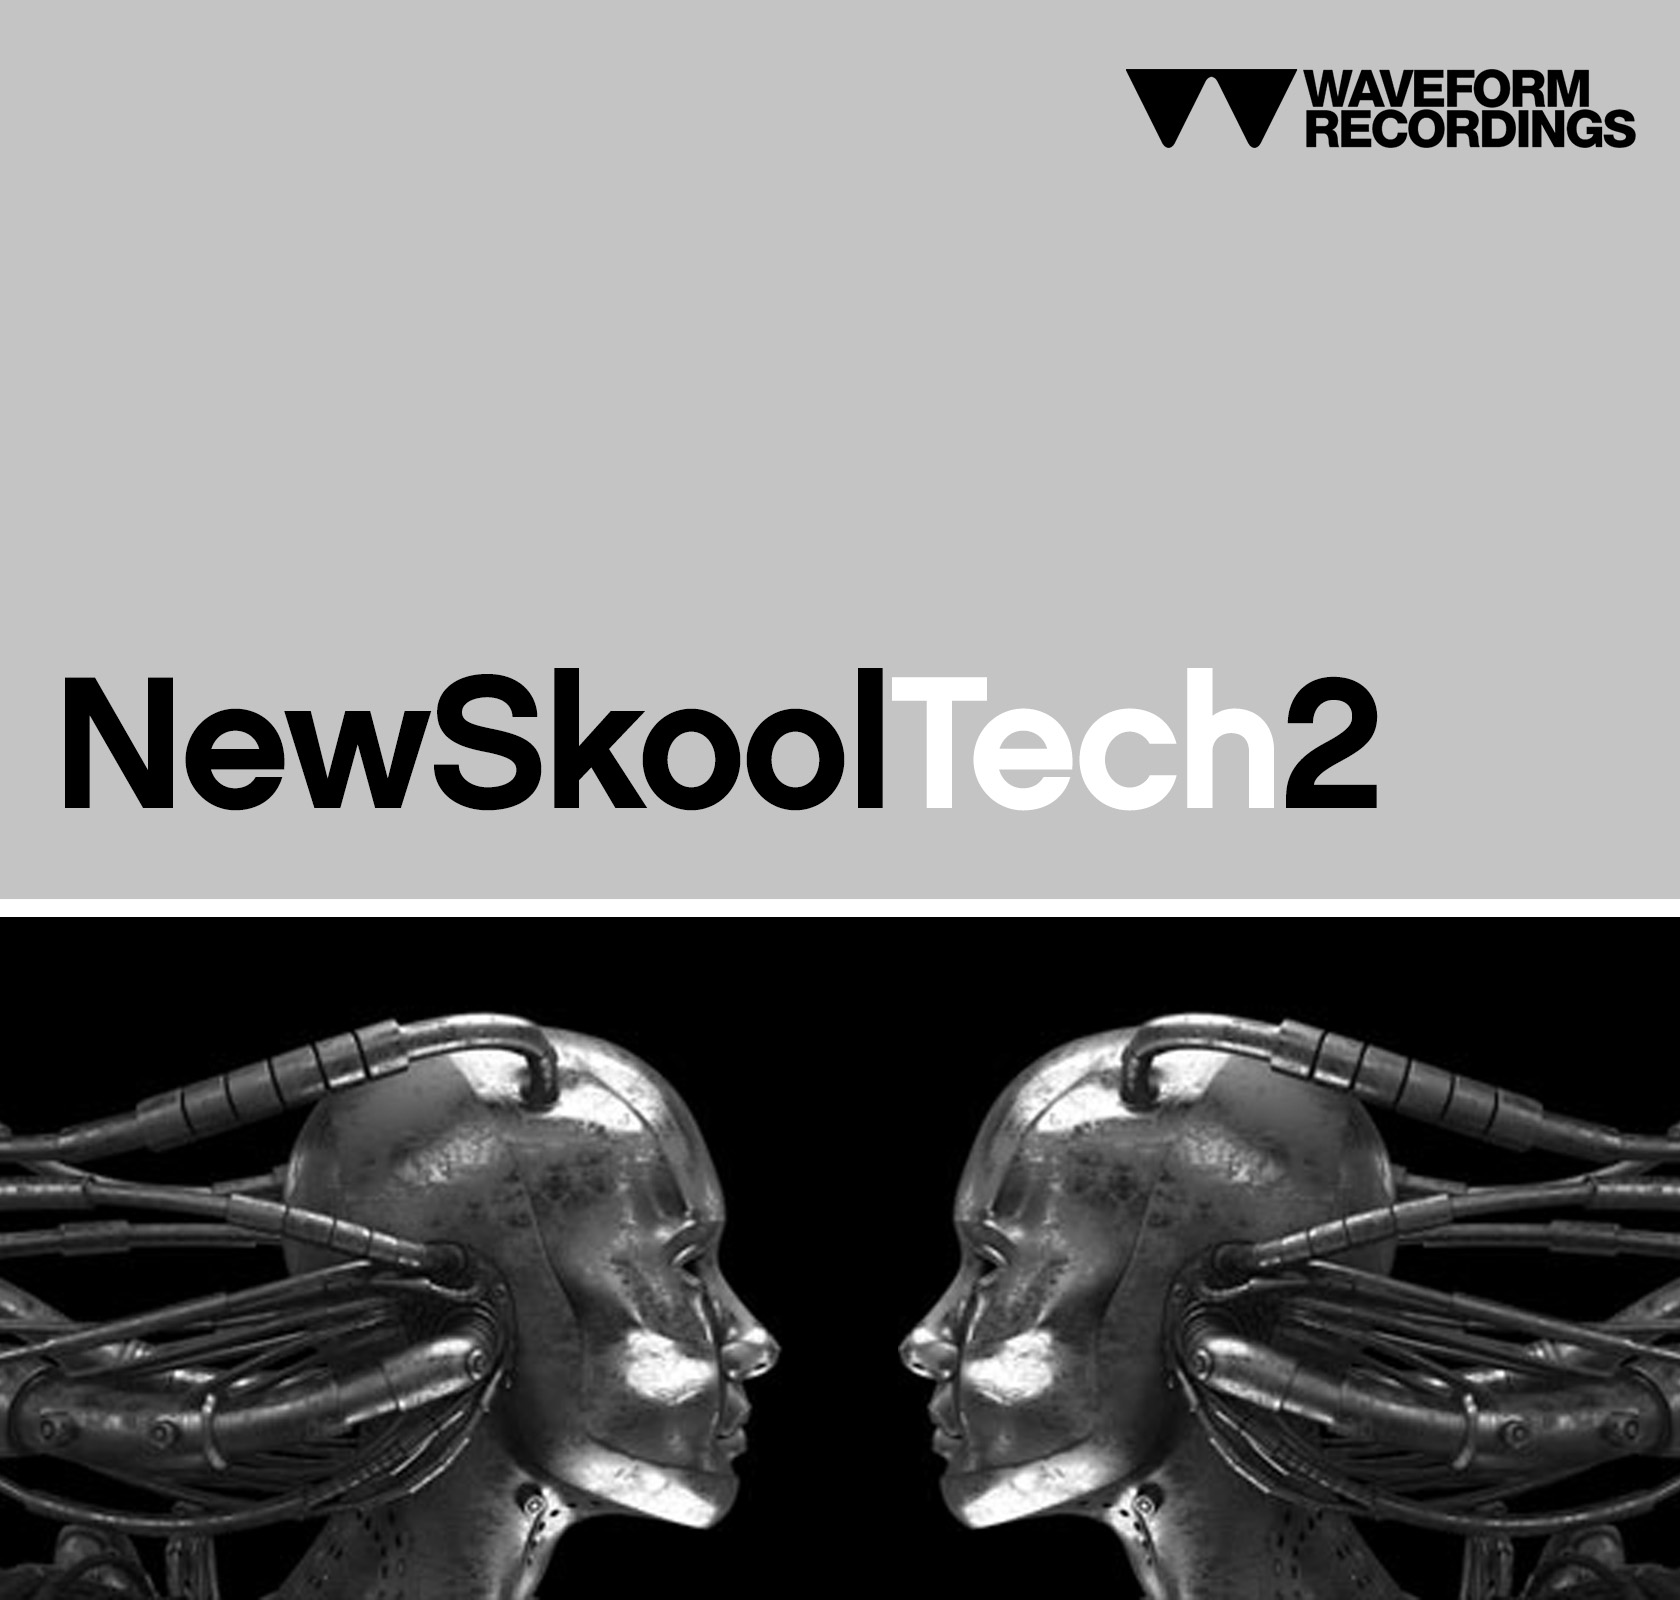 Waveform Recordings - New Skool Tech 2